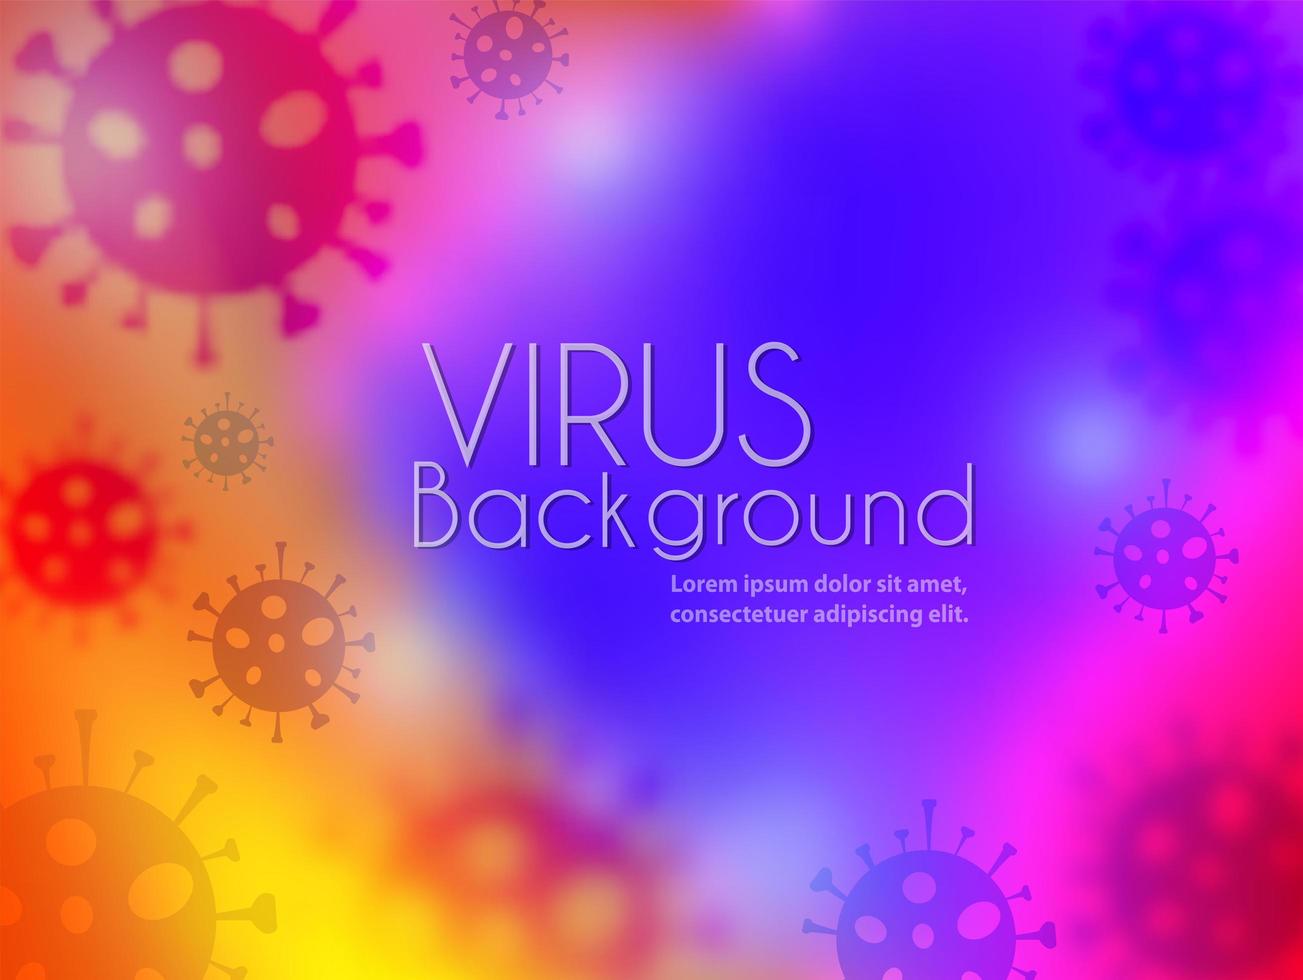 Virus epidemic molecule illustration background for vector